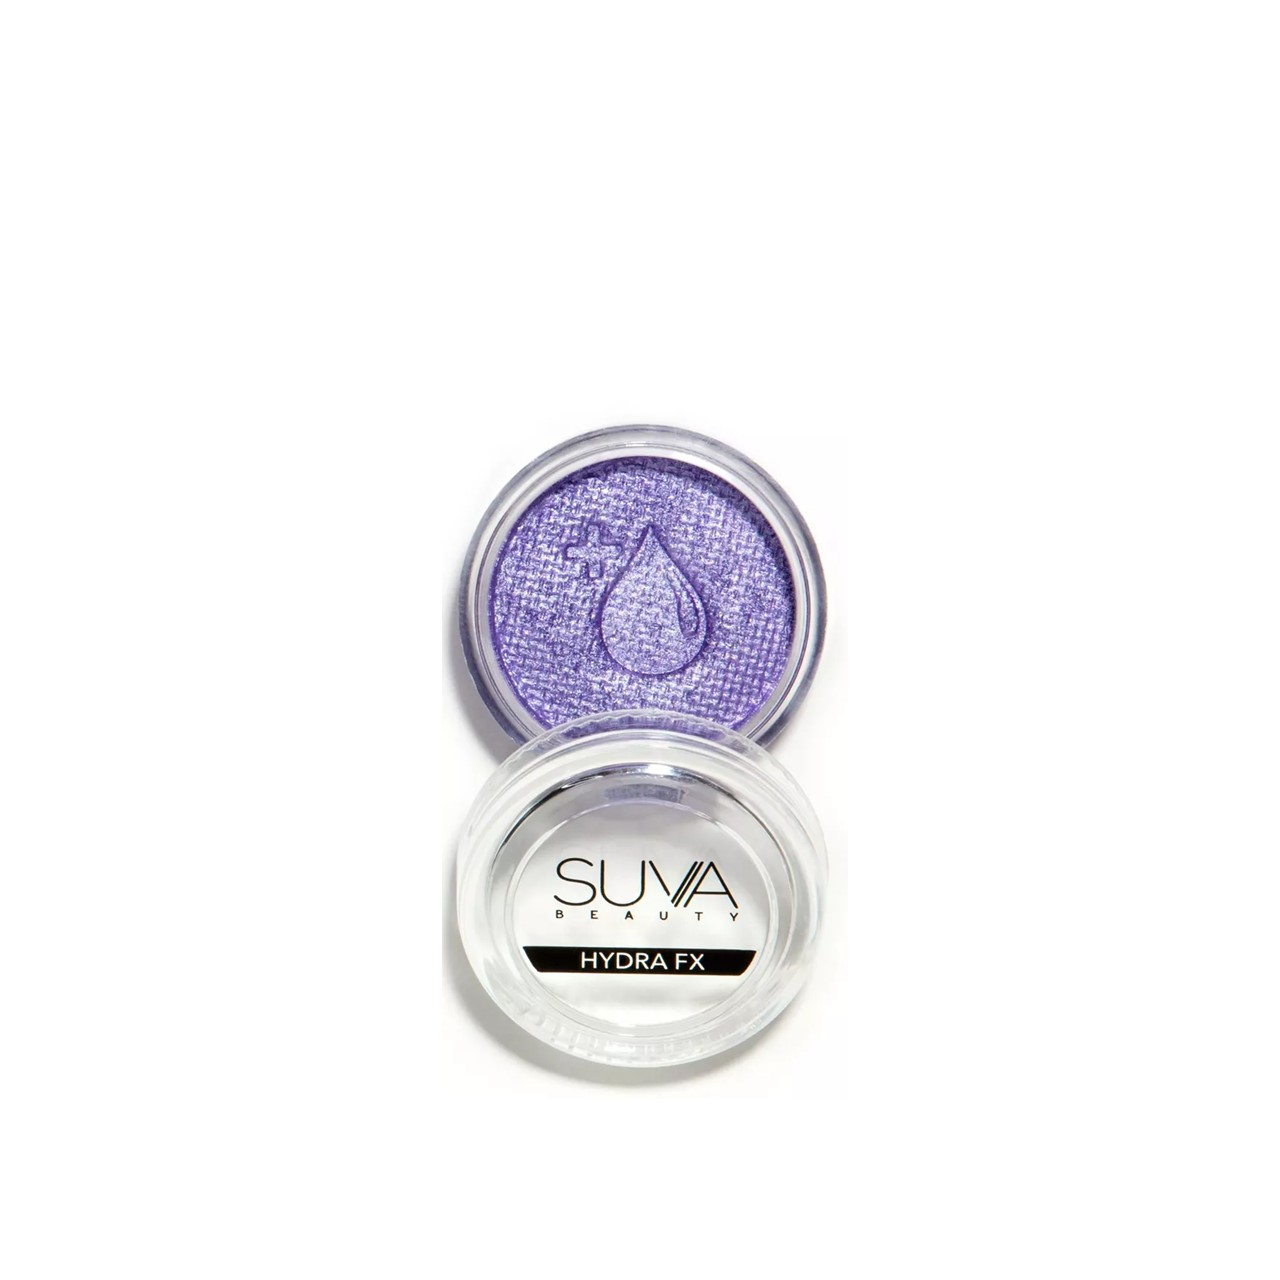 SUVA Beauty Hydra FX Lustre Lilac Chrome Body Art 10g (0.35oz)